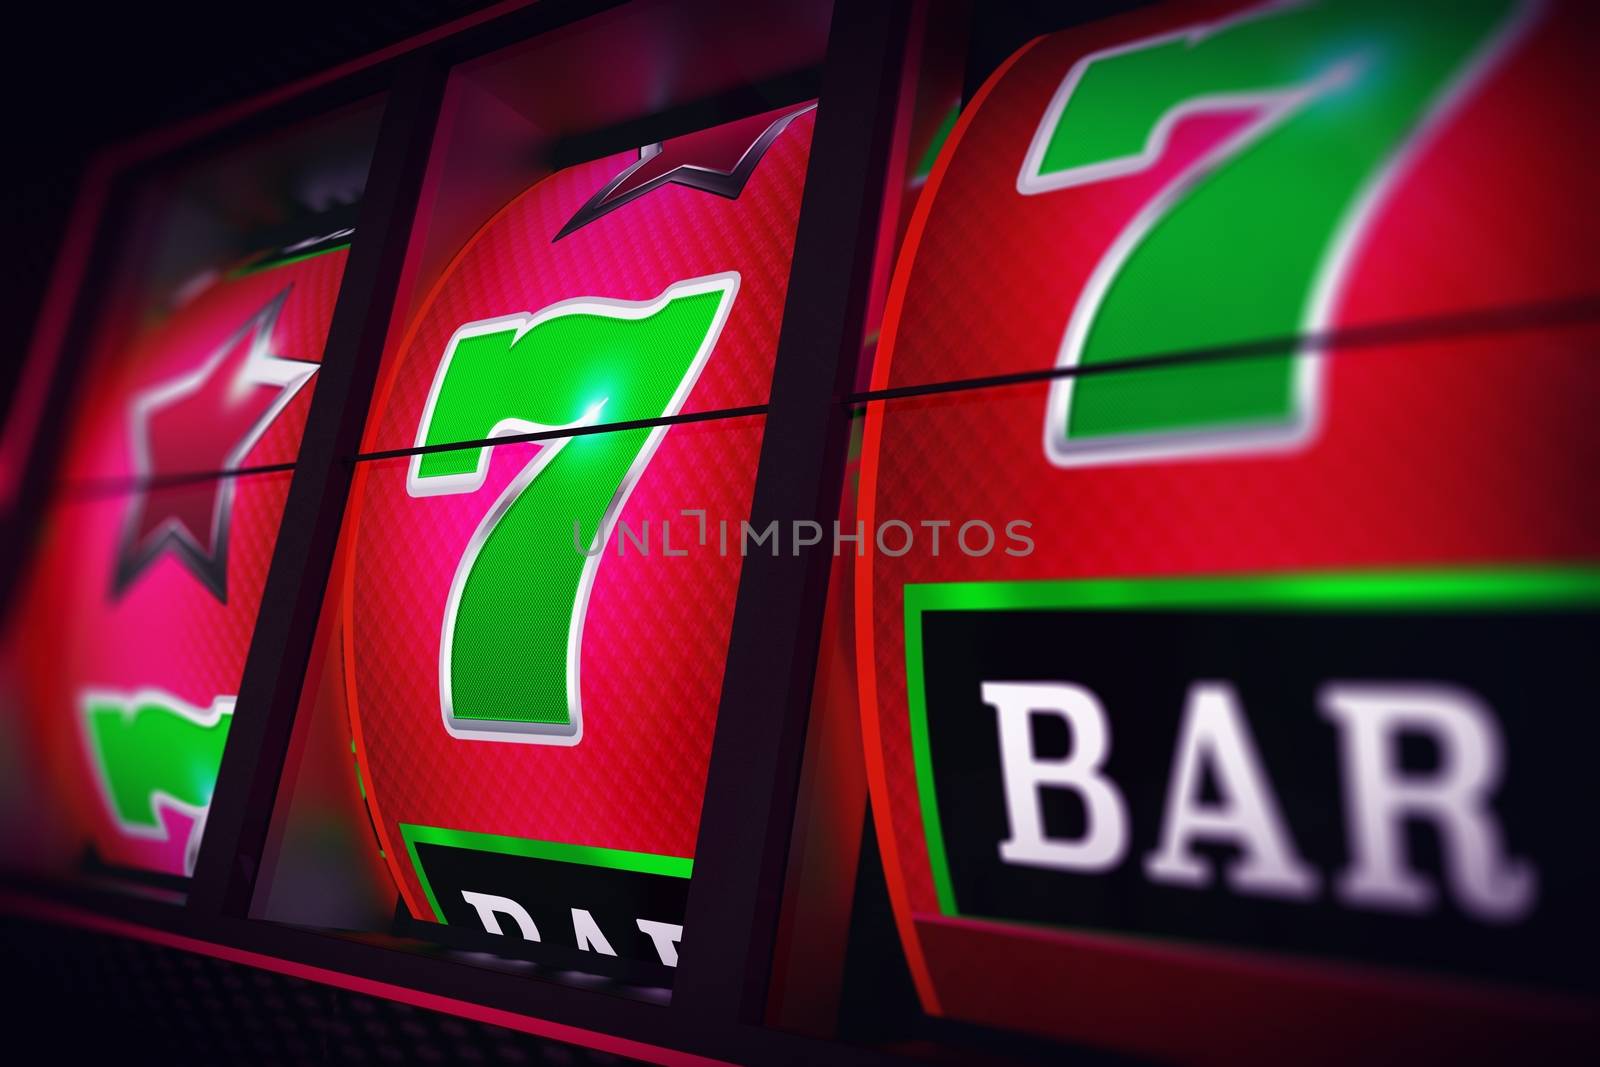 Lucky Slot Jackpot Spin 3D One Handed Bandit Casino Game Render Illustration.